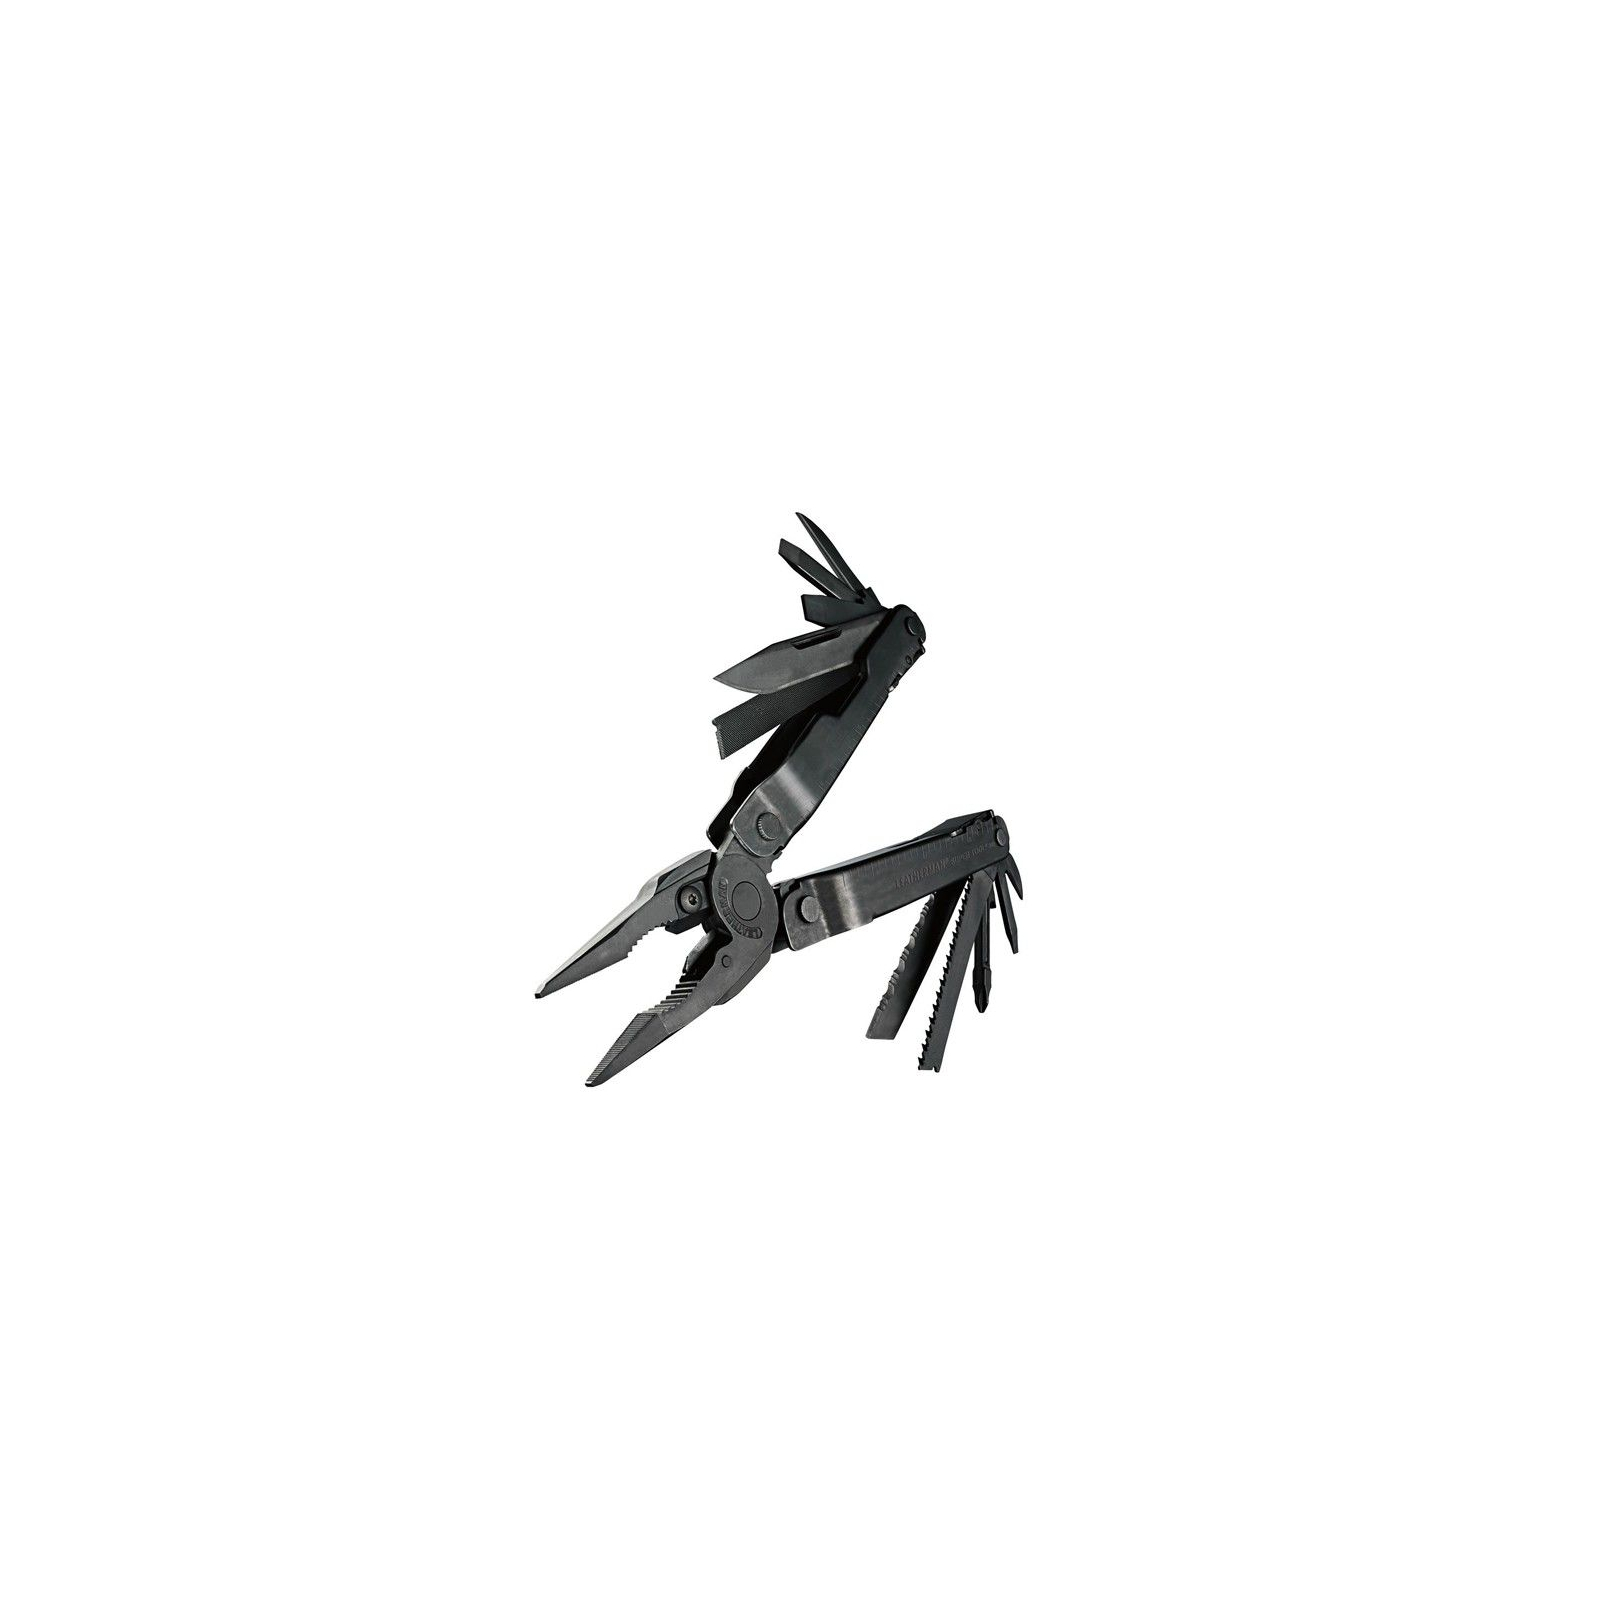 Мультитул Leatherman Super Tool 300 BLACK, чехол MOLLE (черн), картонная коробка (831151) изображение 2